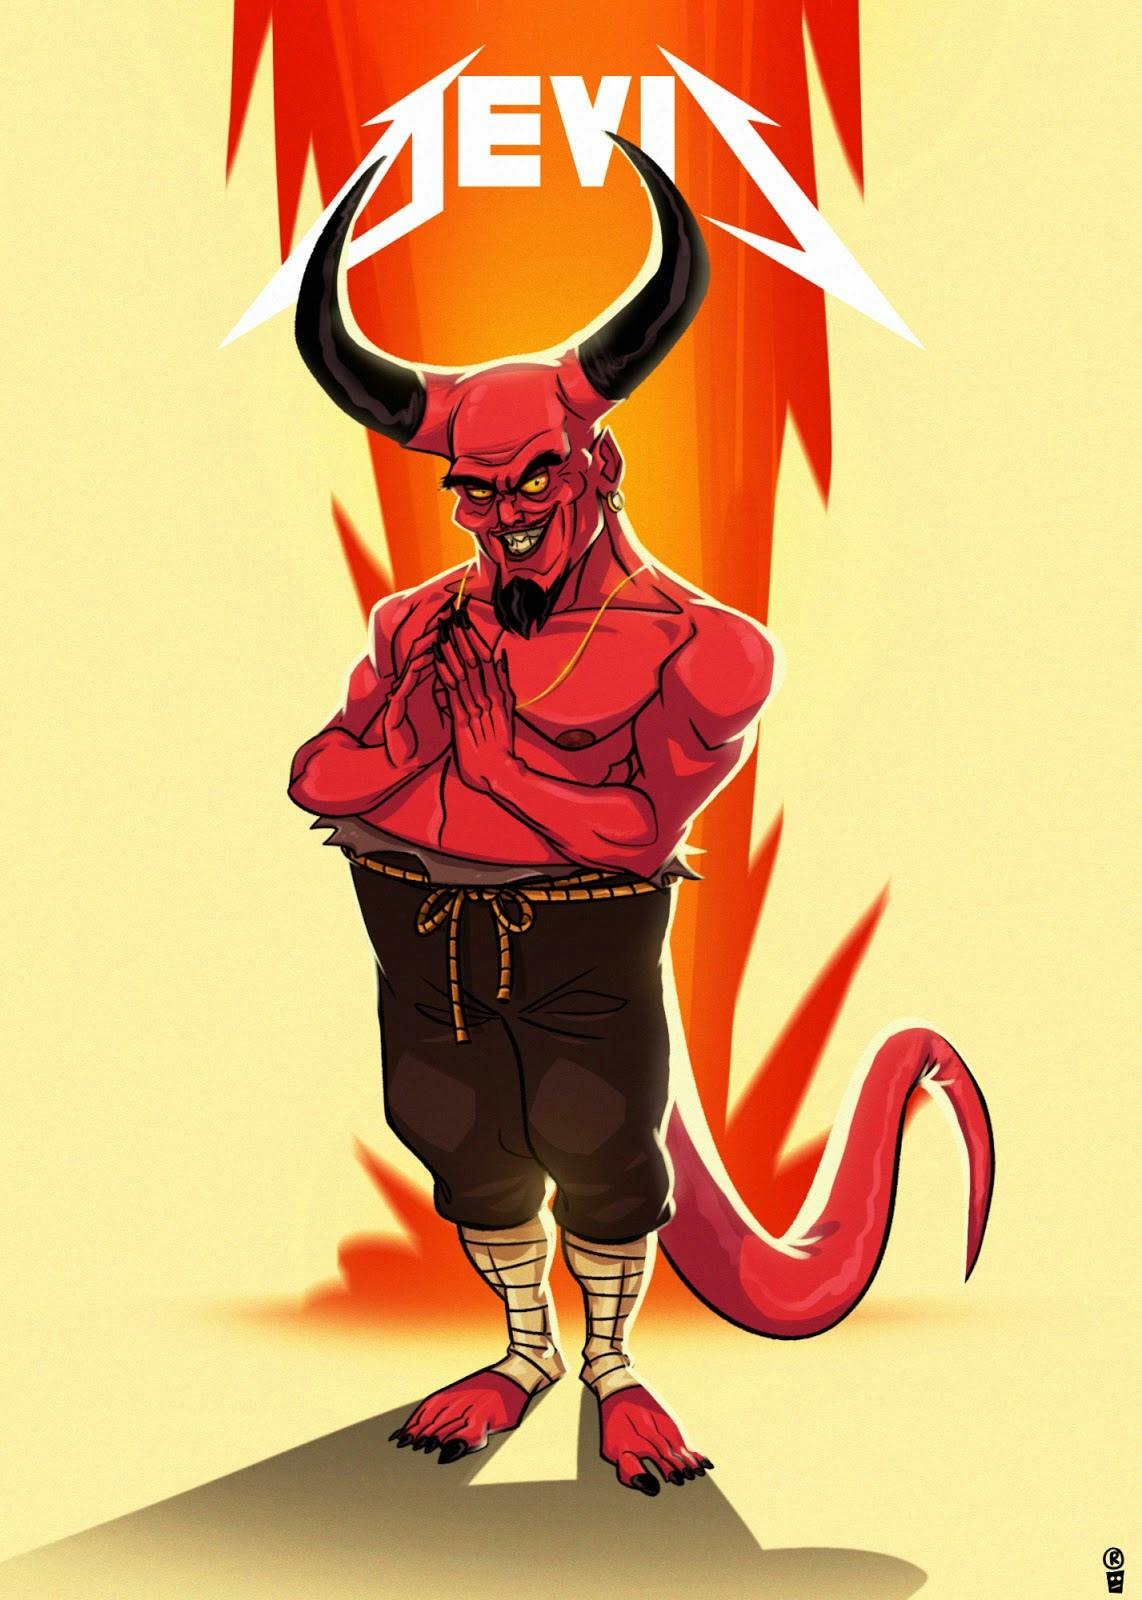 A Devil poster